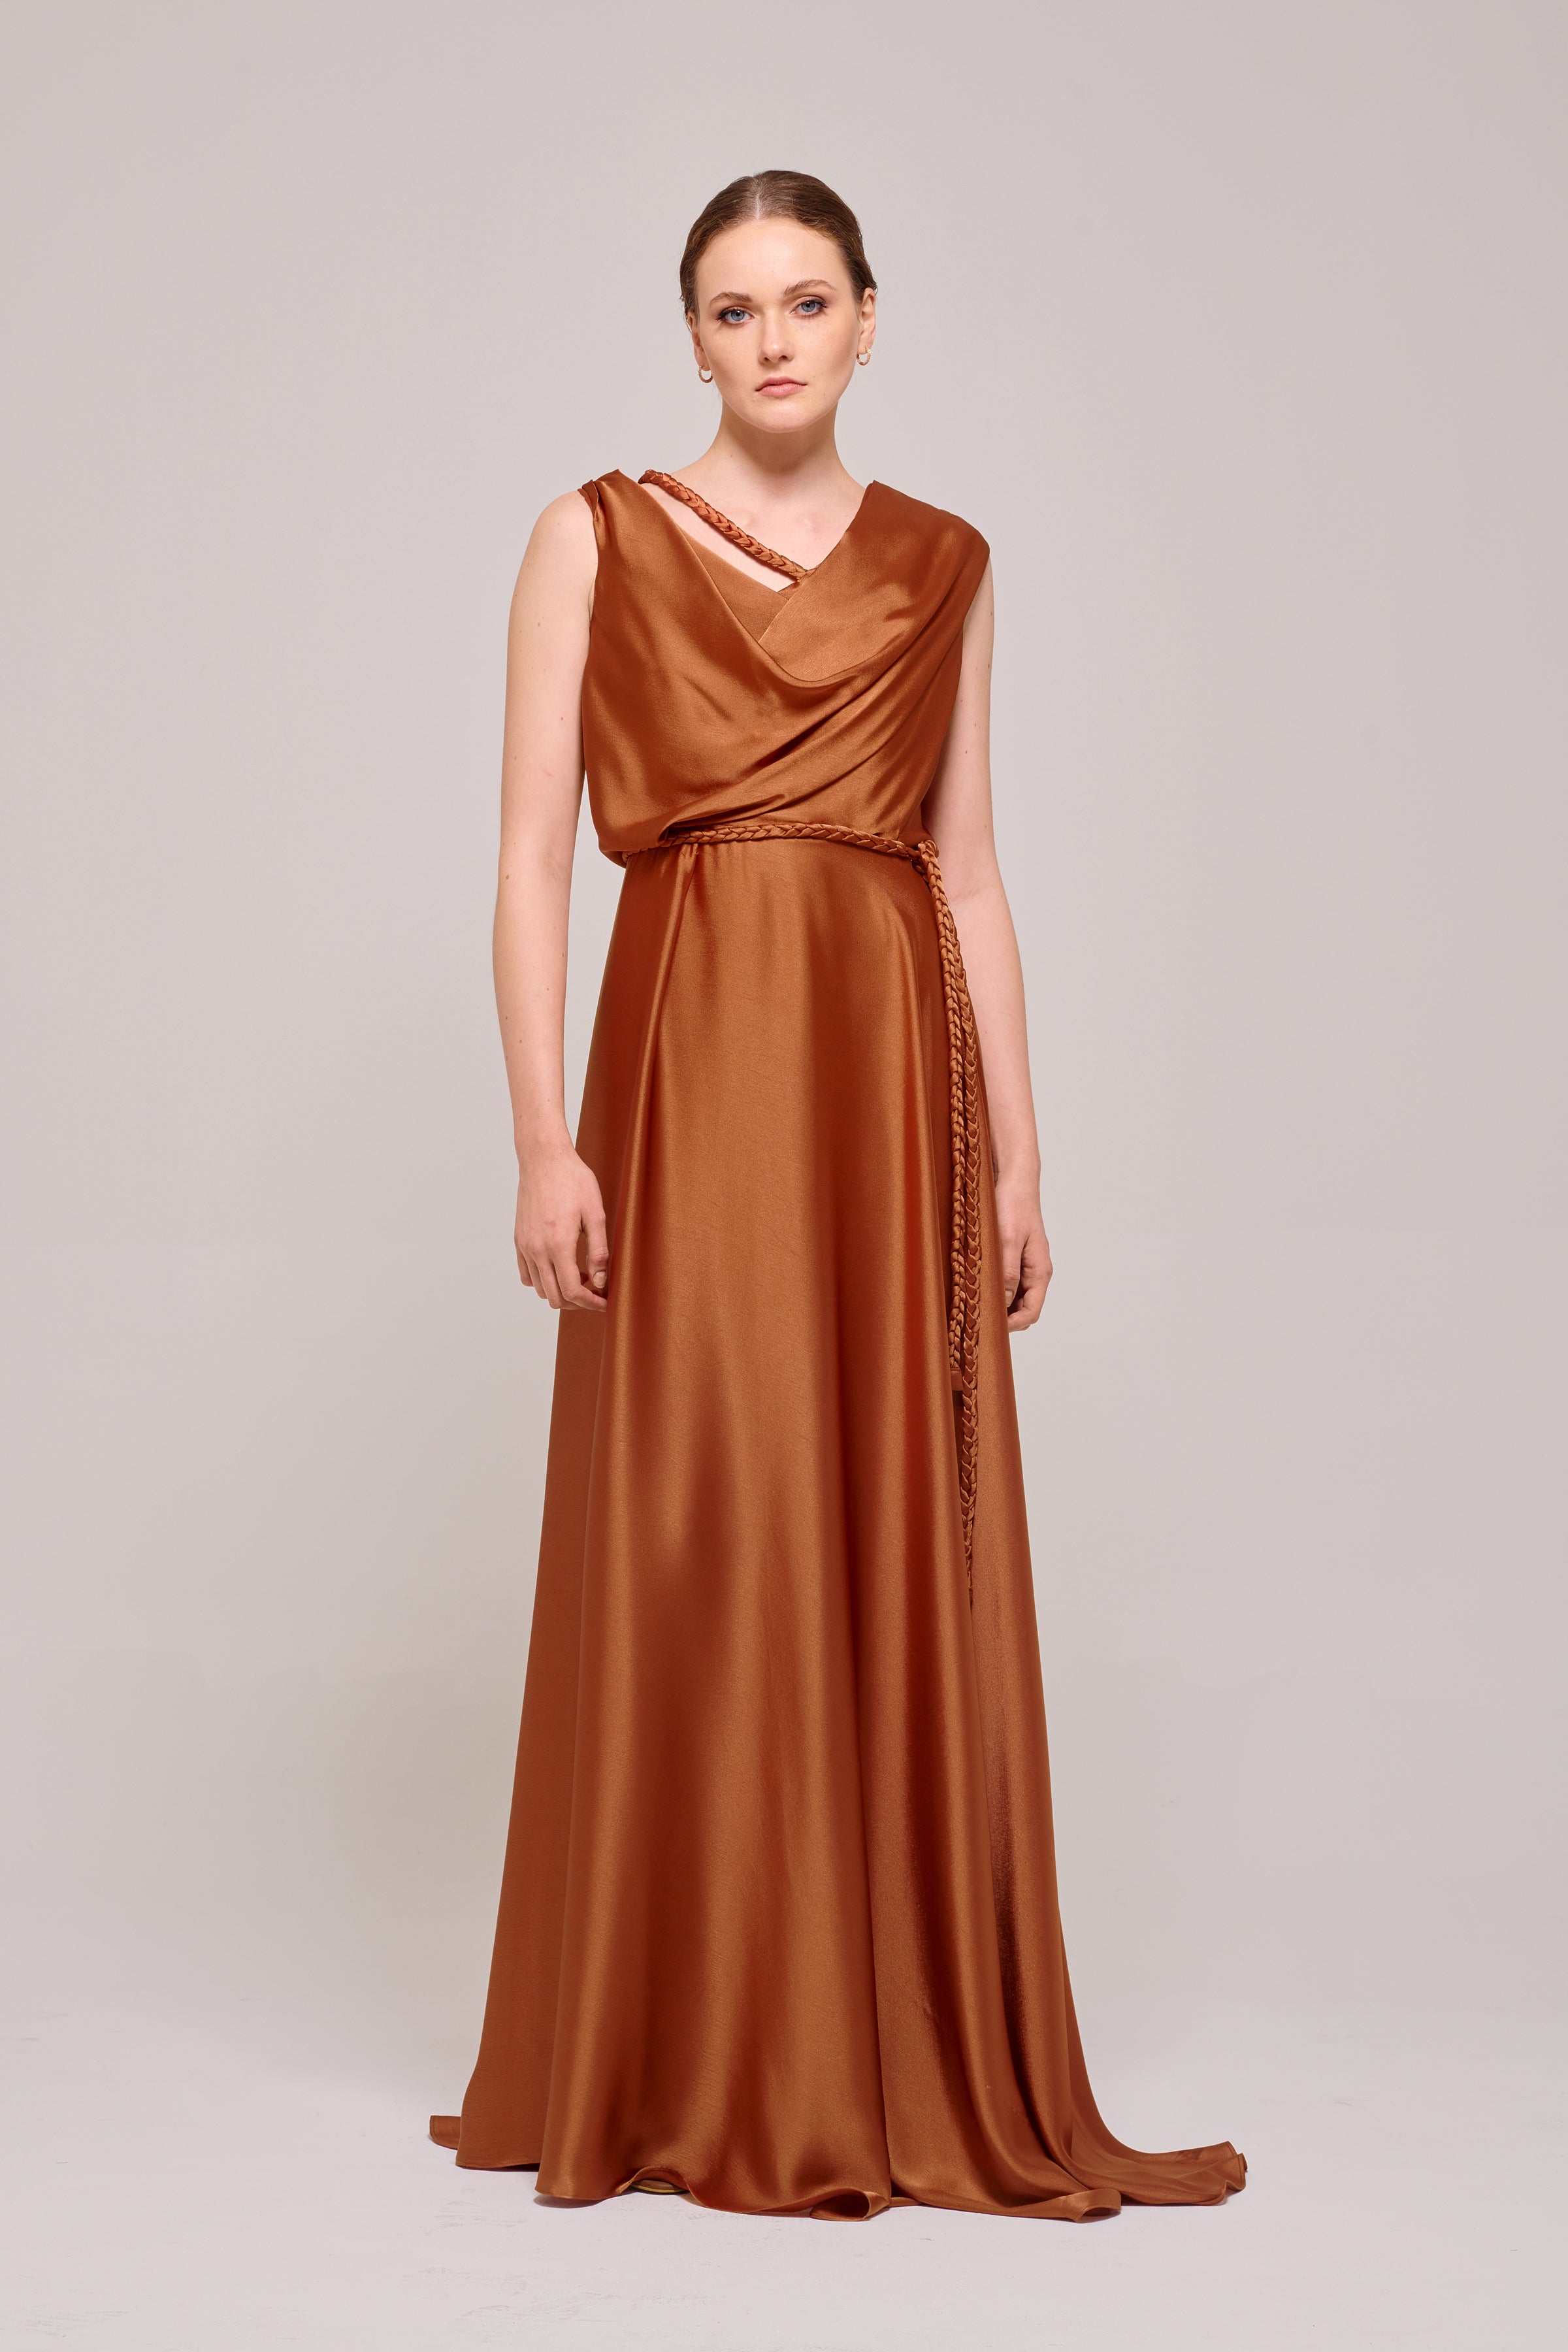 bronze color dress